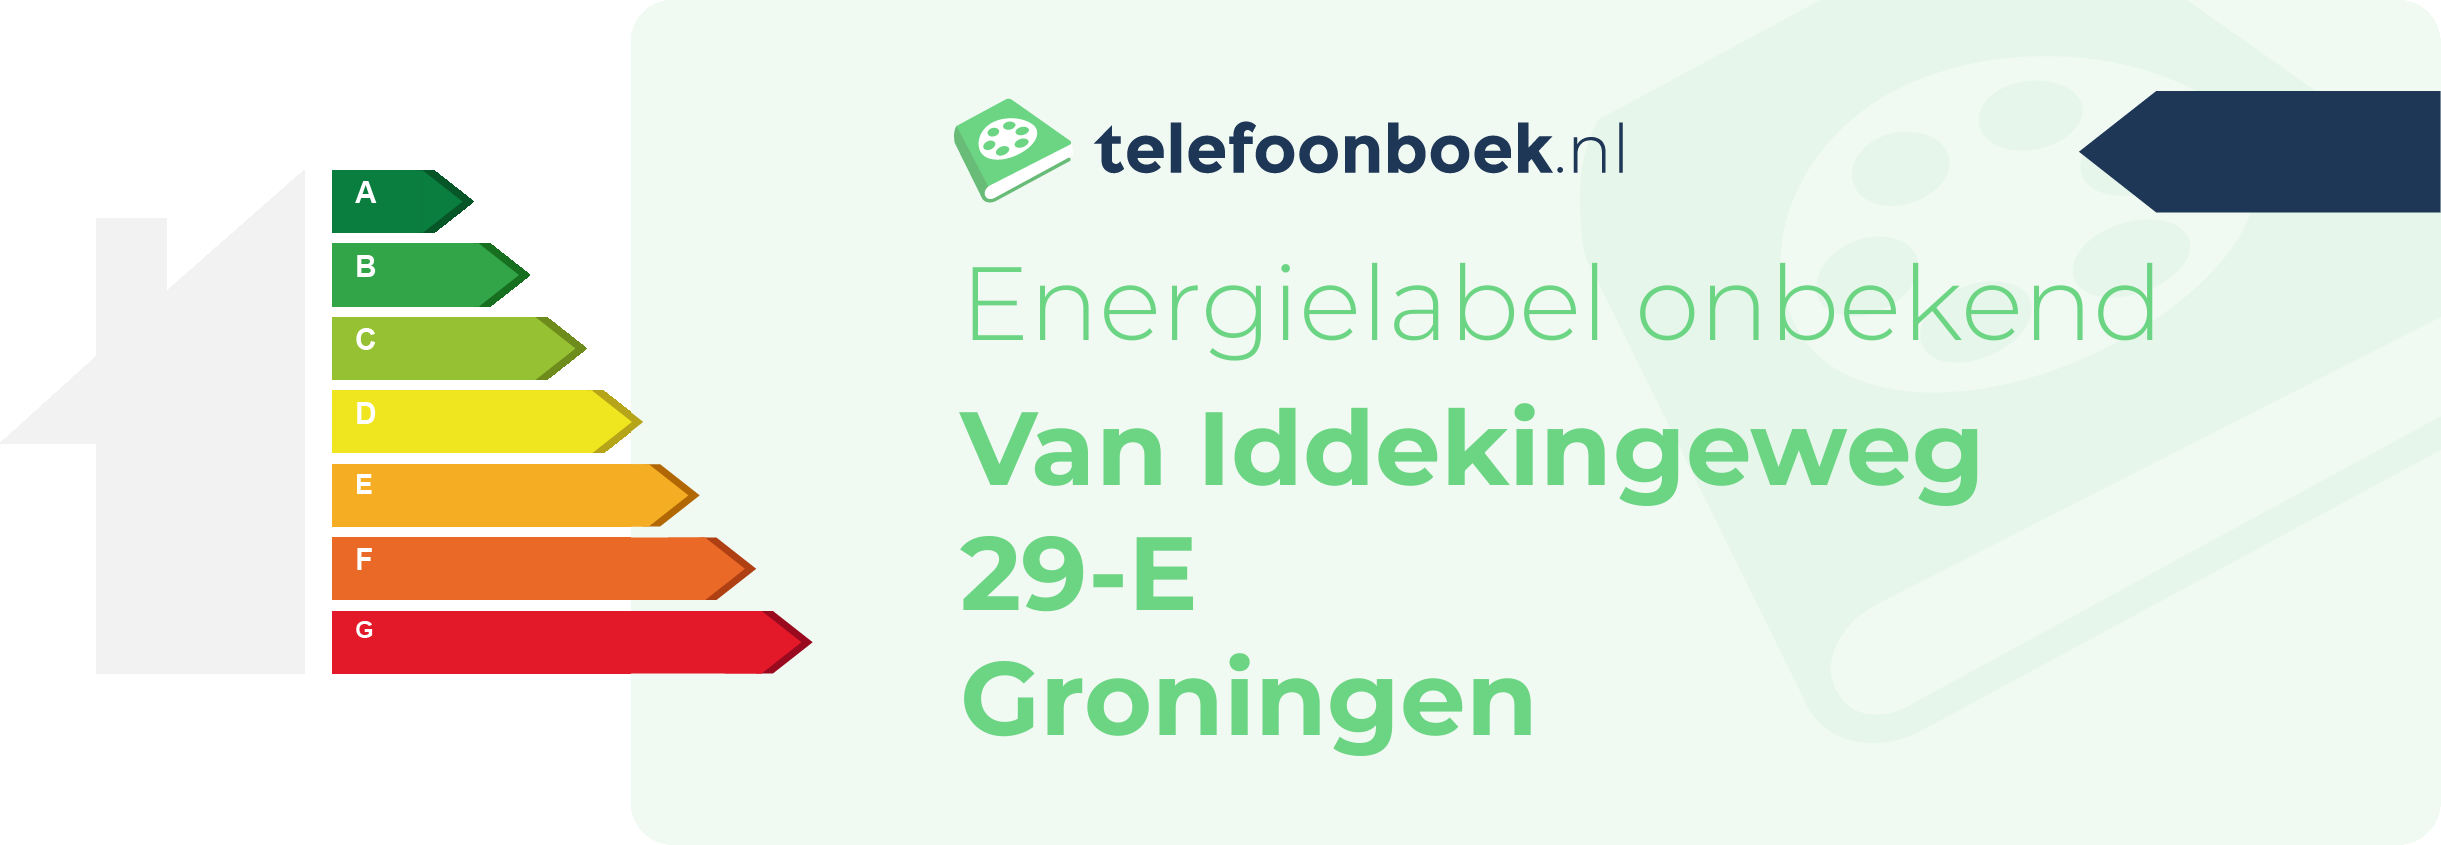 Energielabel Van Iddekingeweg 29-E Groningen